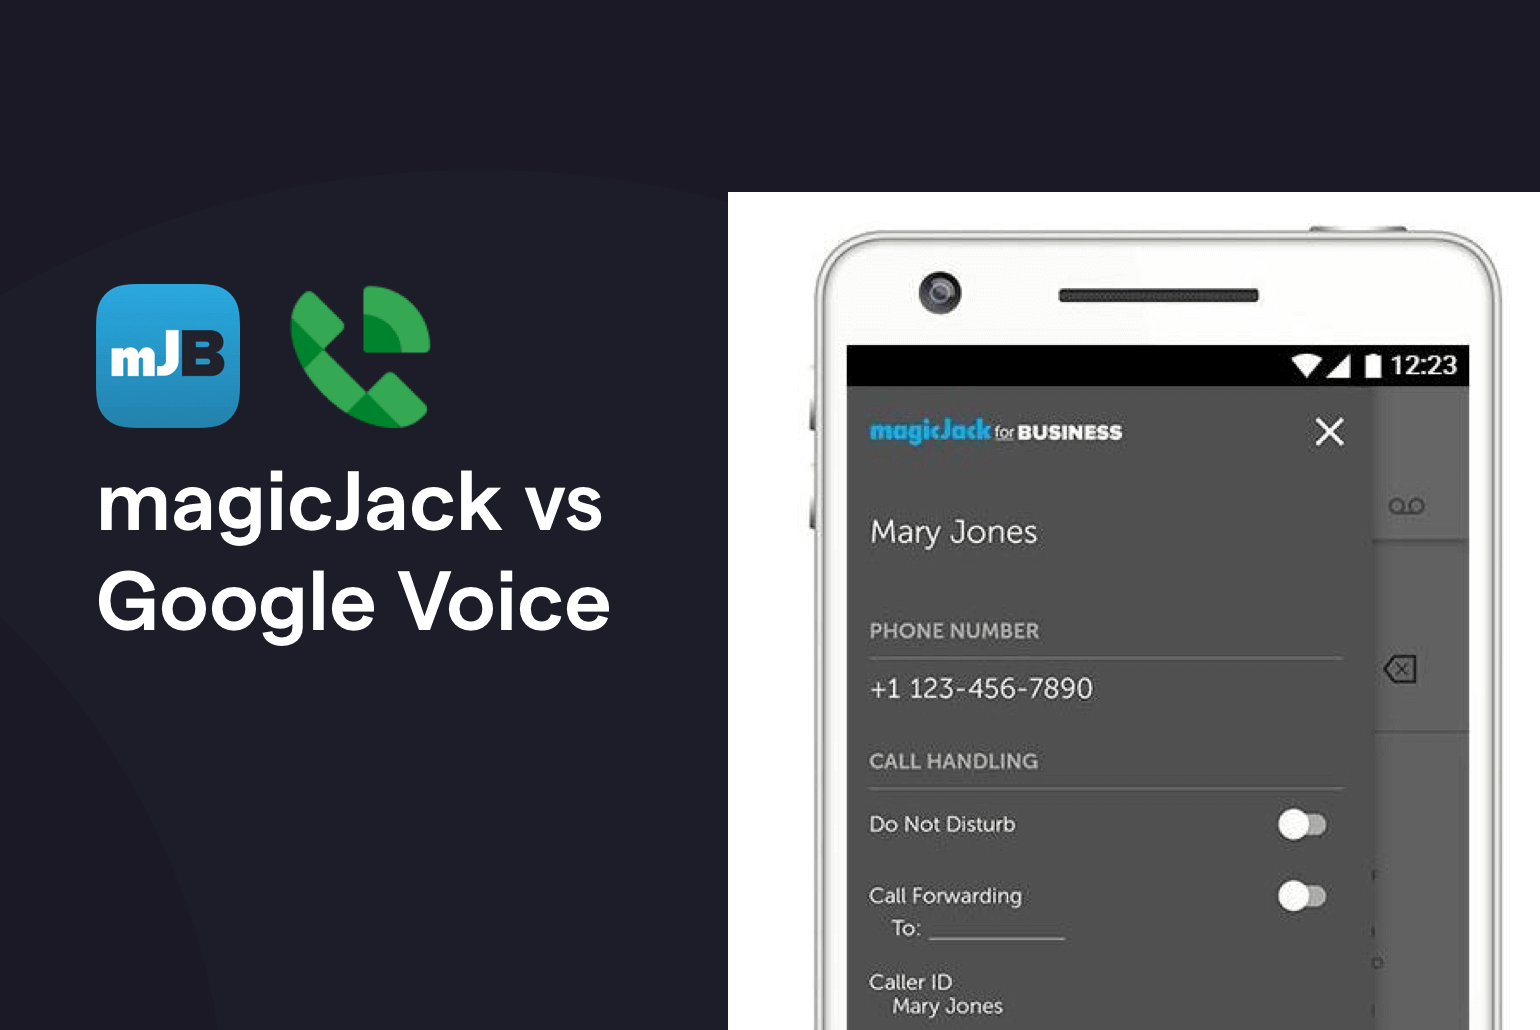 magicJack vs Google Voice